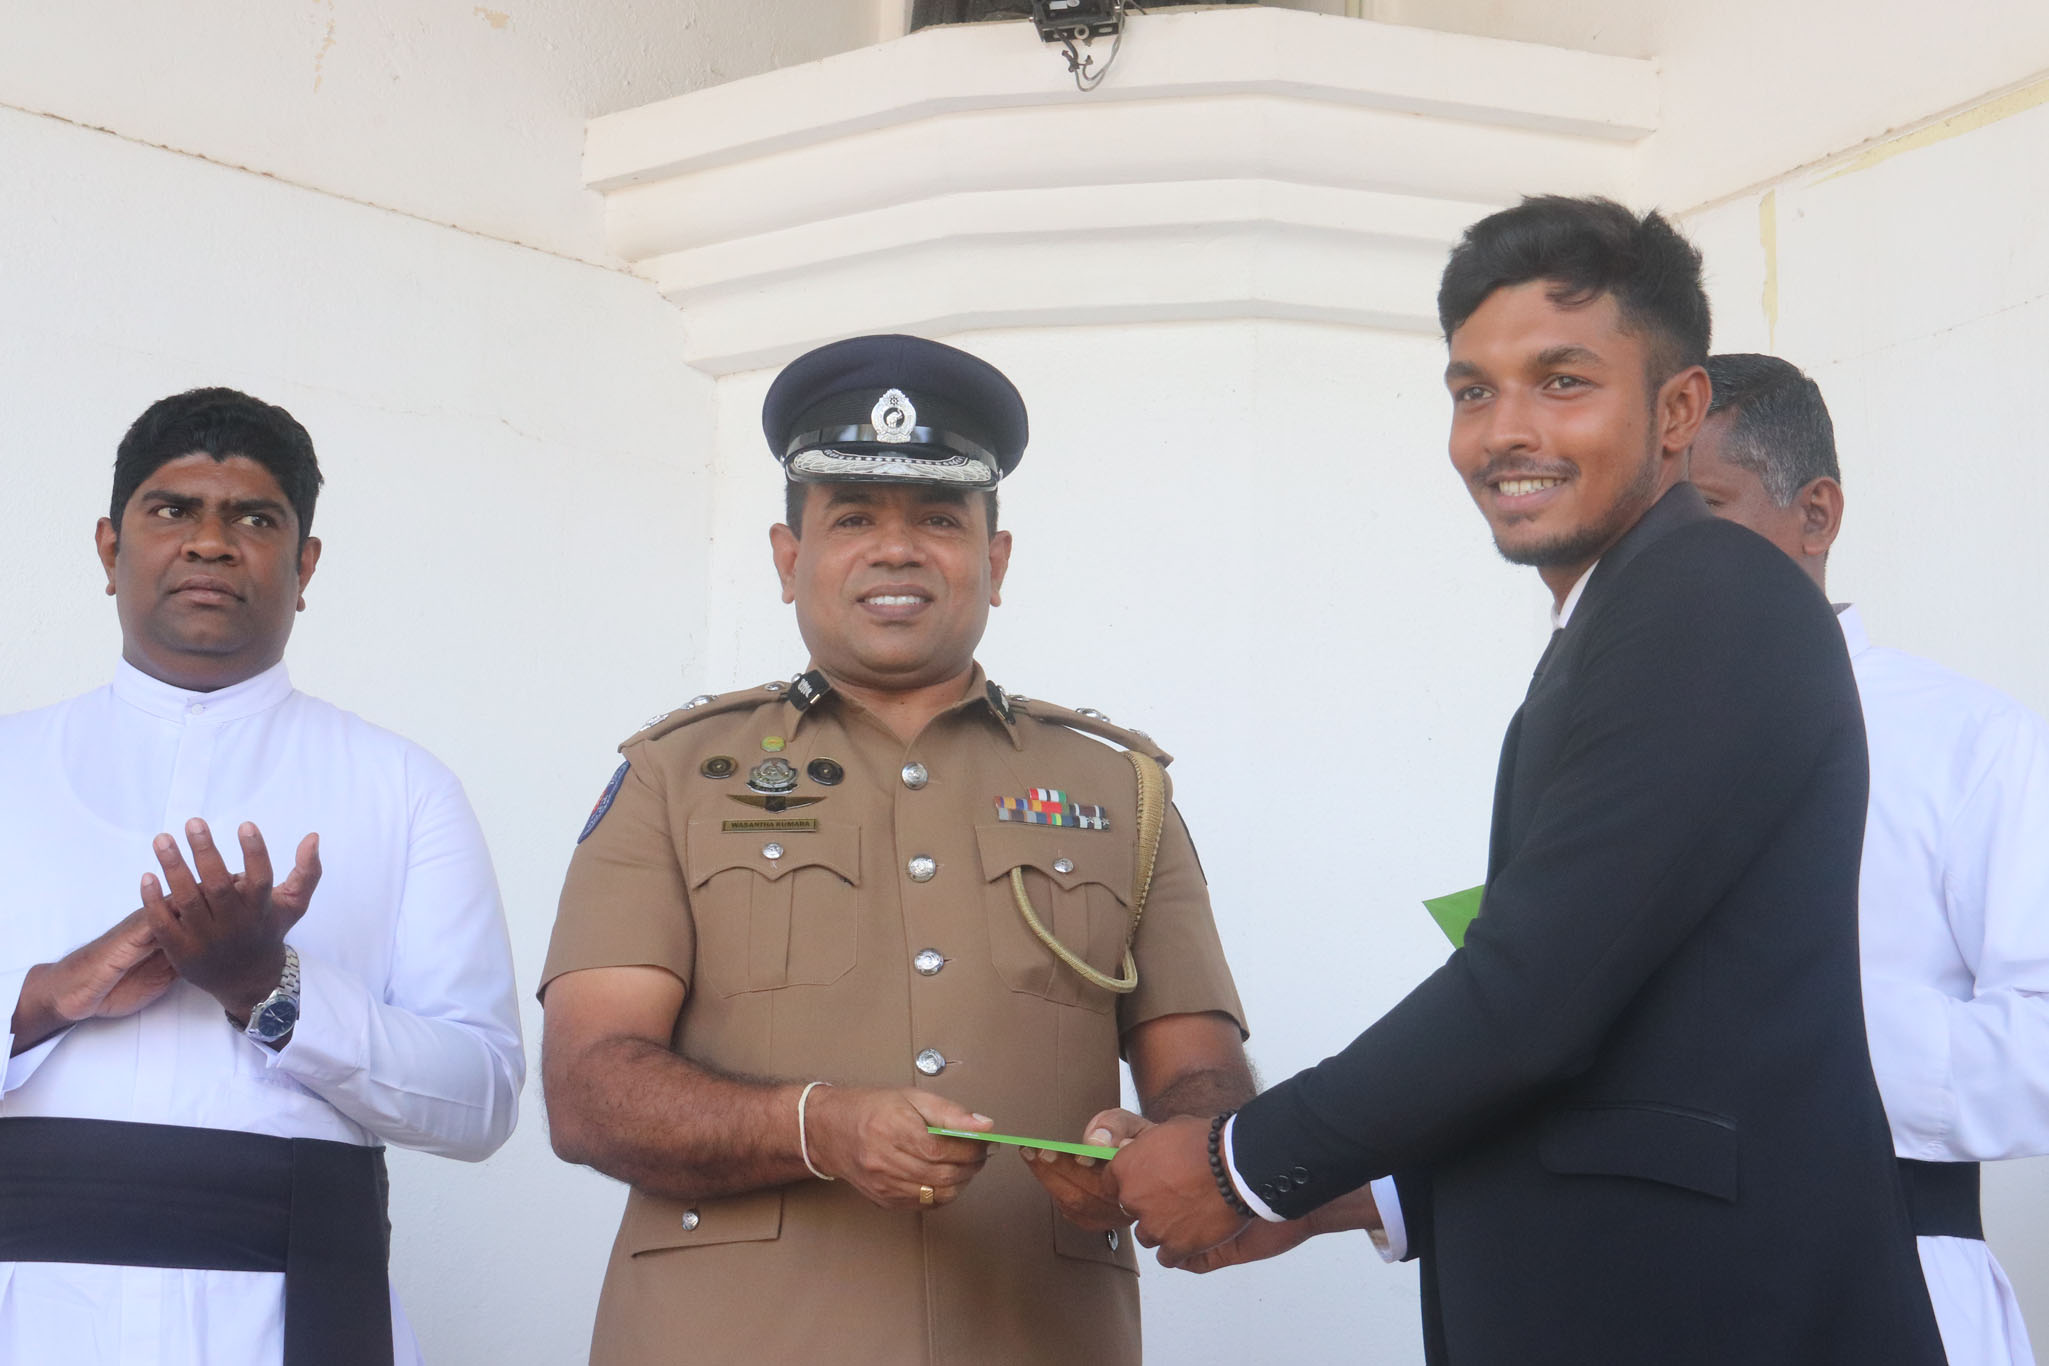 Oba Donates 1m Rupees To Enhance School Cricket - St. Joseph Vaz College - Wennappuwa - Sri Lanka